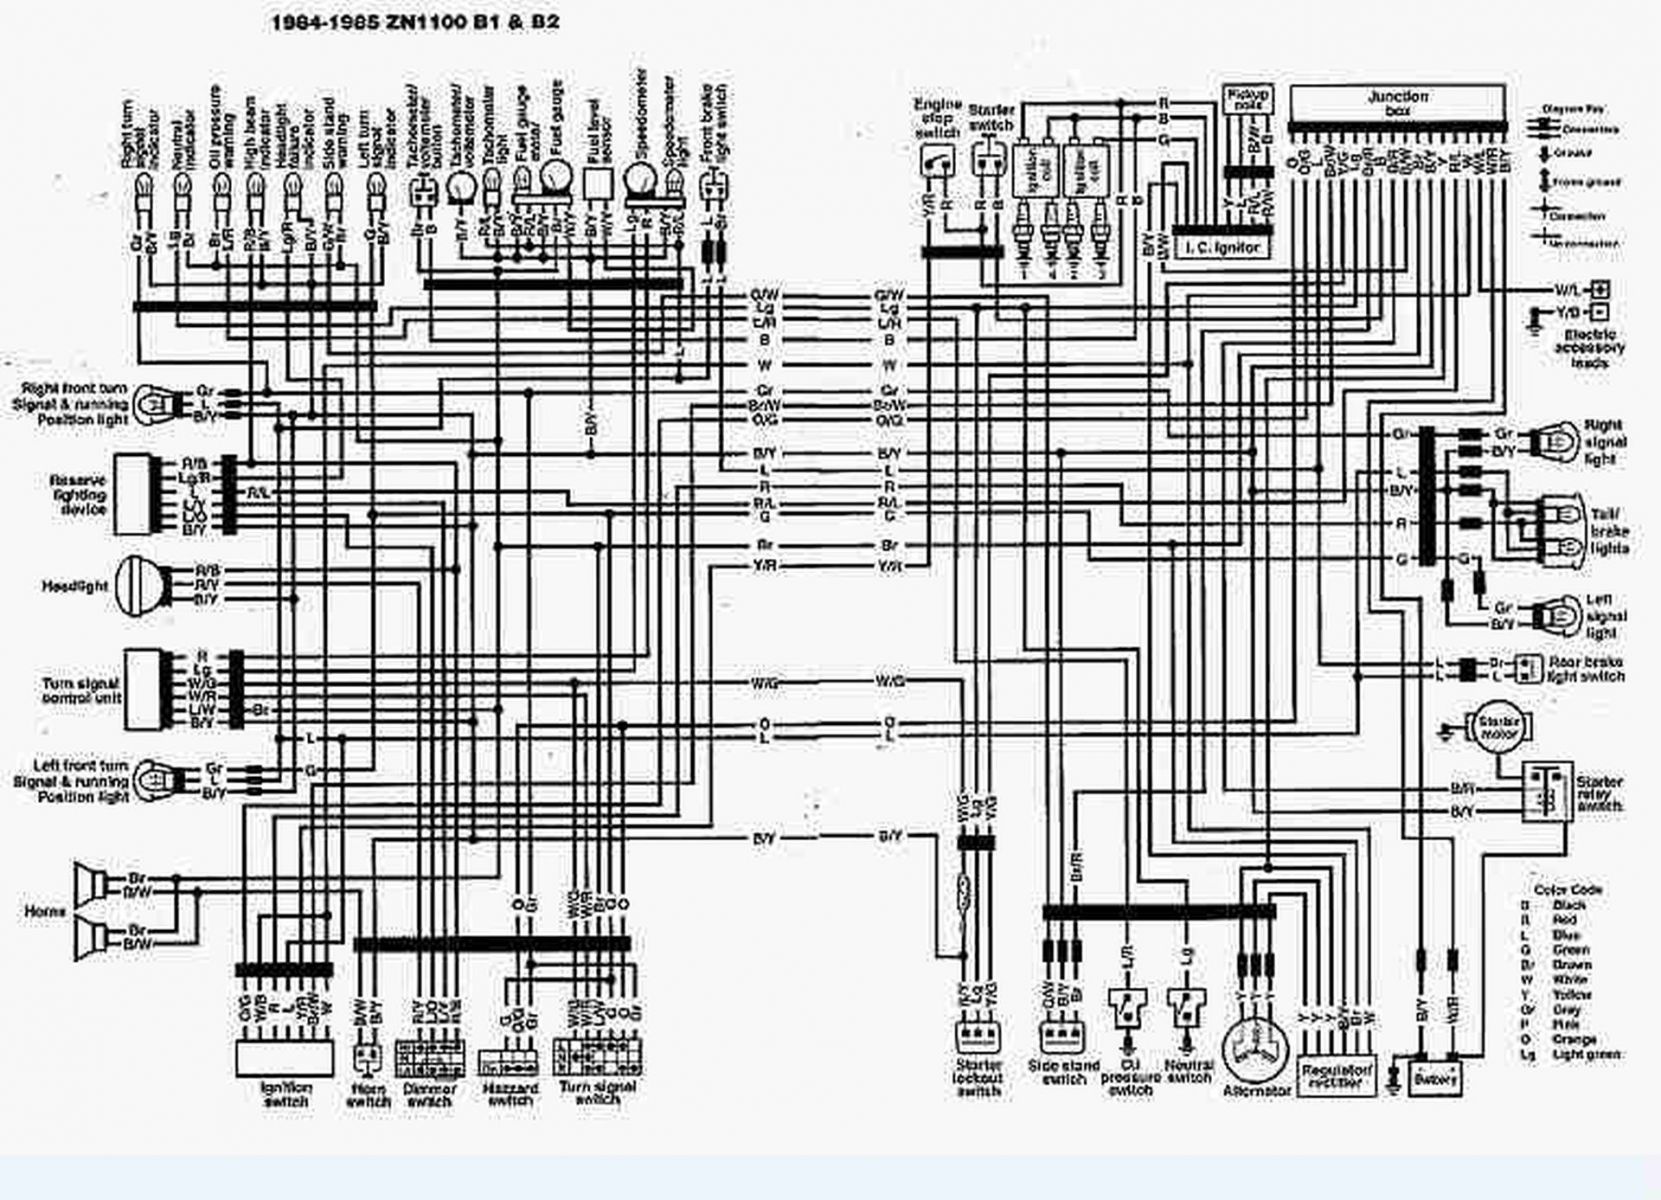 Anyone Have A 1985 Zn1100b2 Wiring Diagram Handy